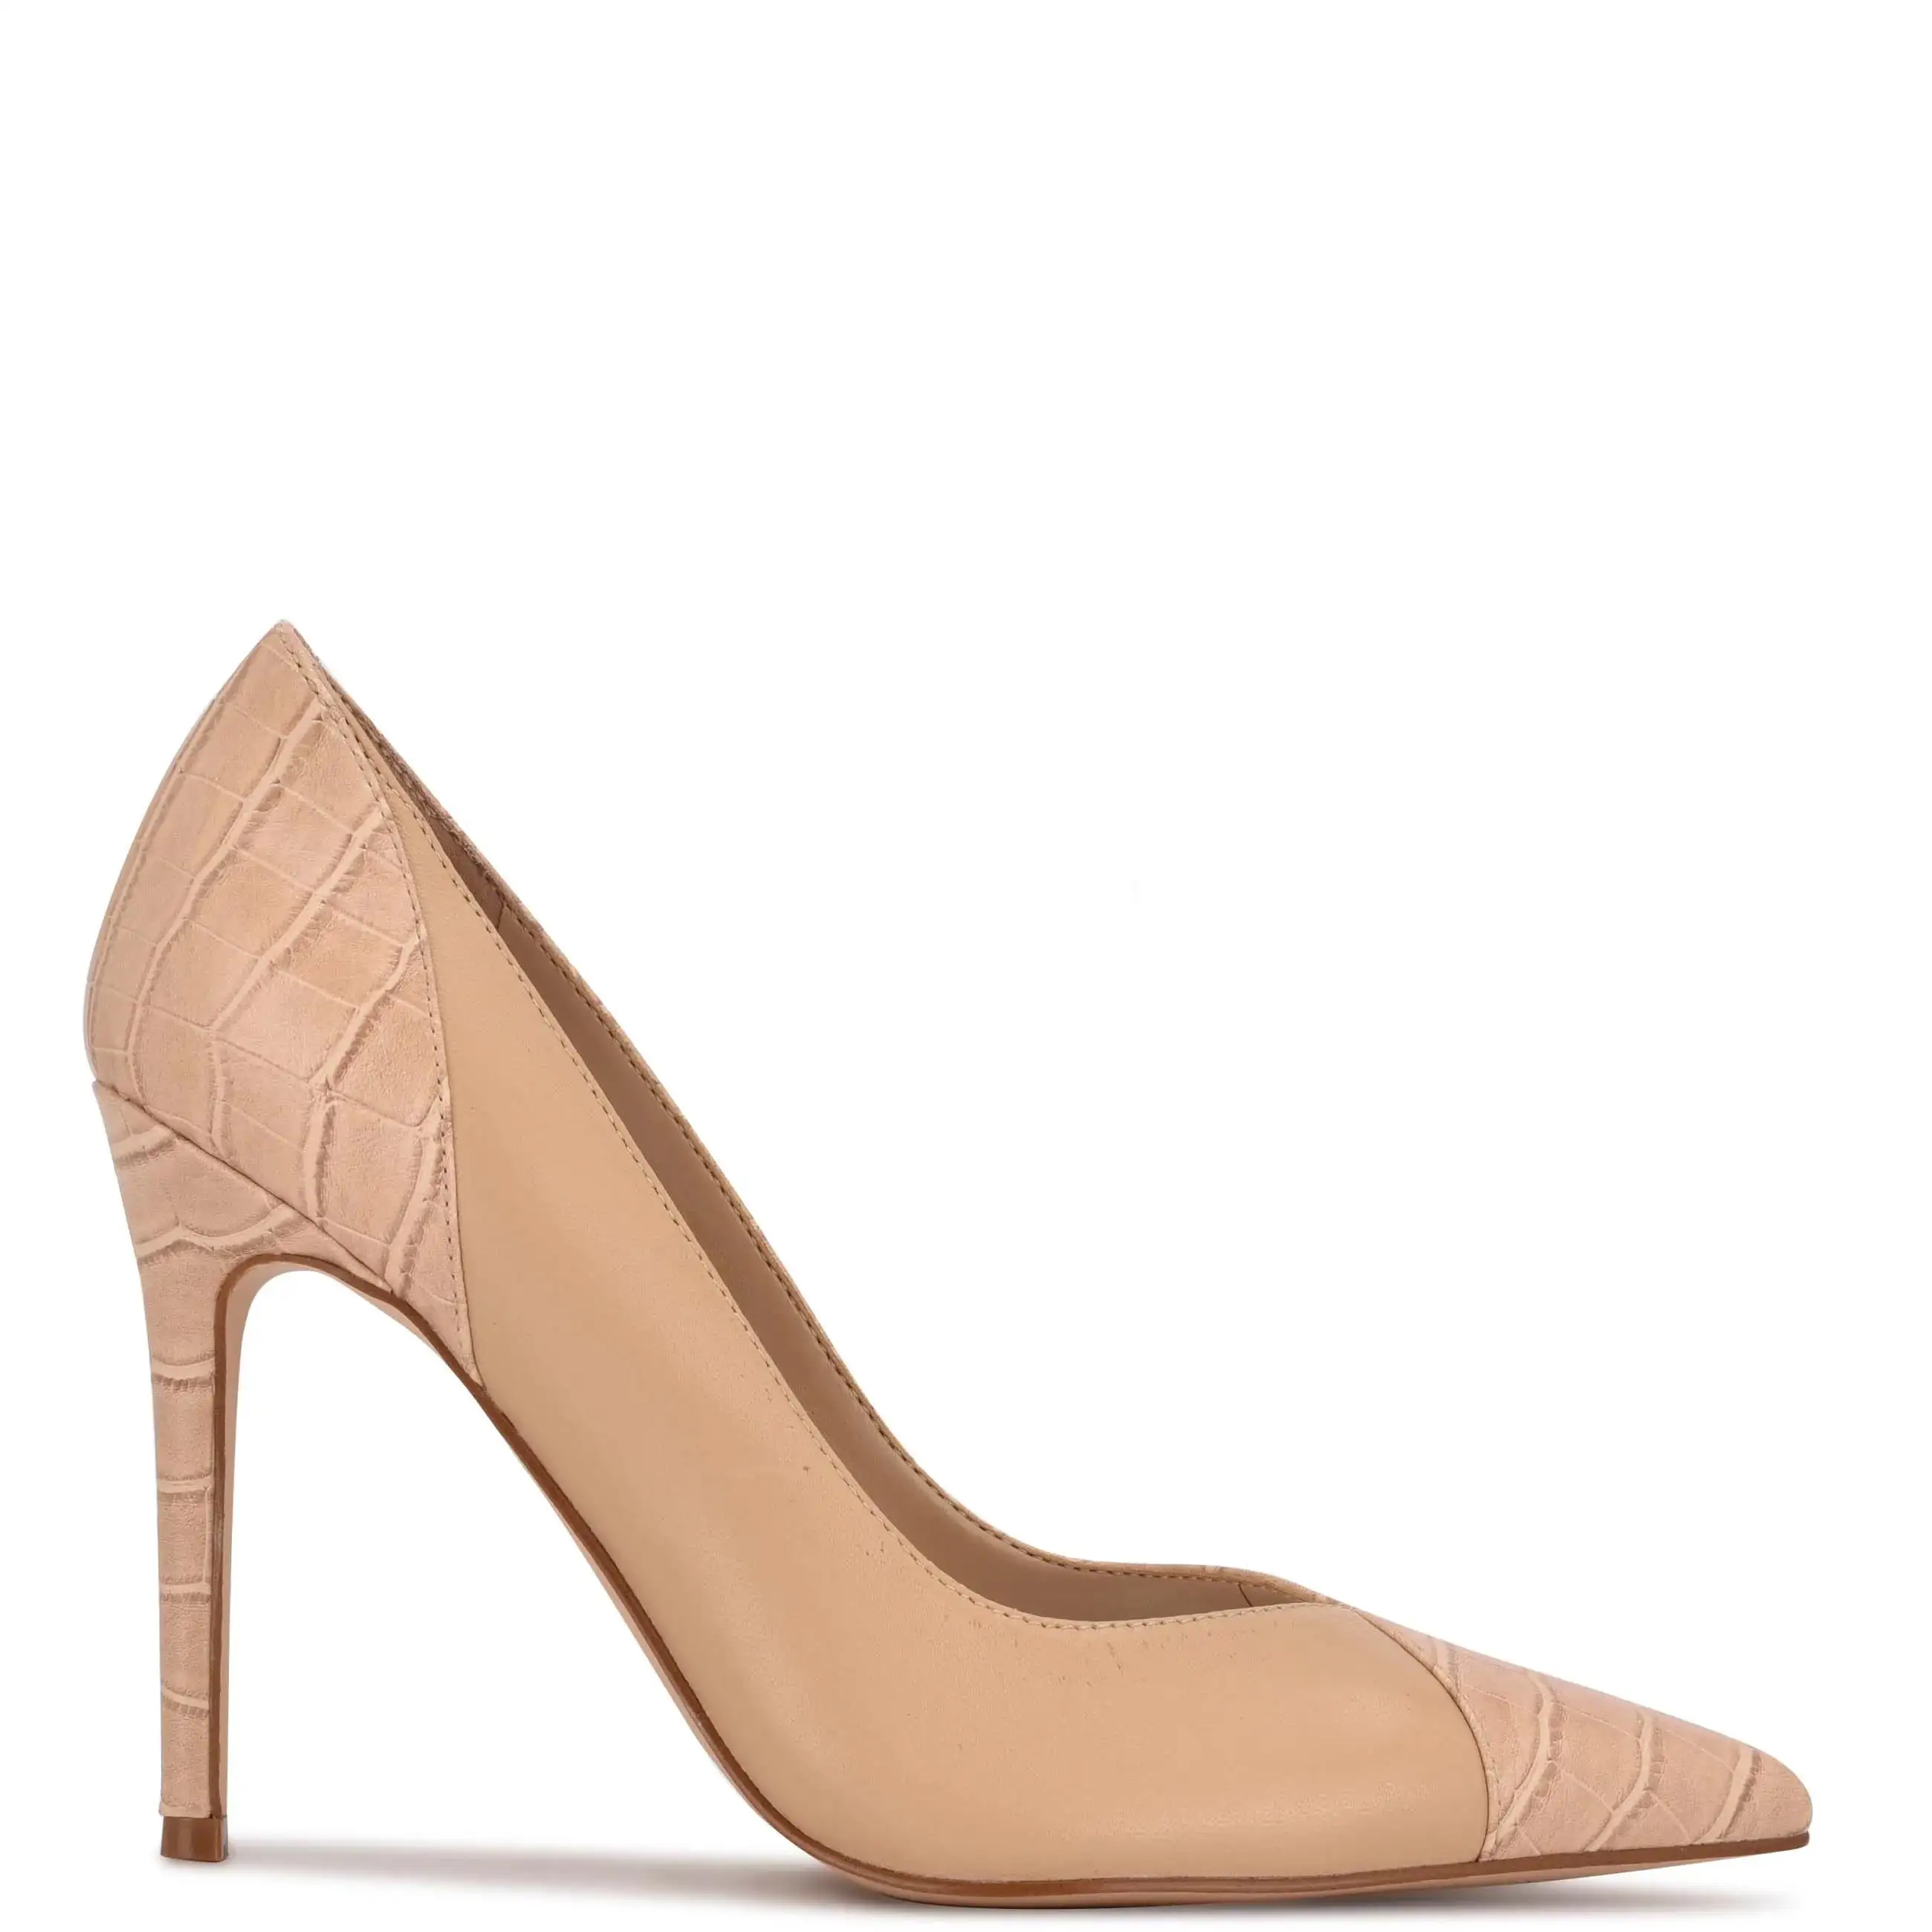 thin high heel pointed toe beige faux crocodile print leather pumps for women or laddies women shoes pumps bride pump shoes